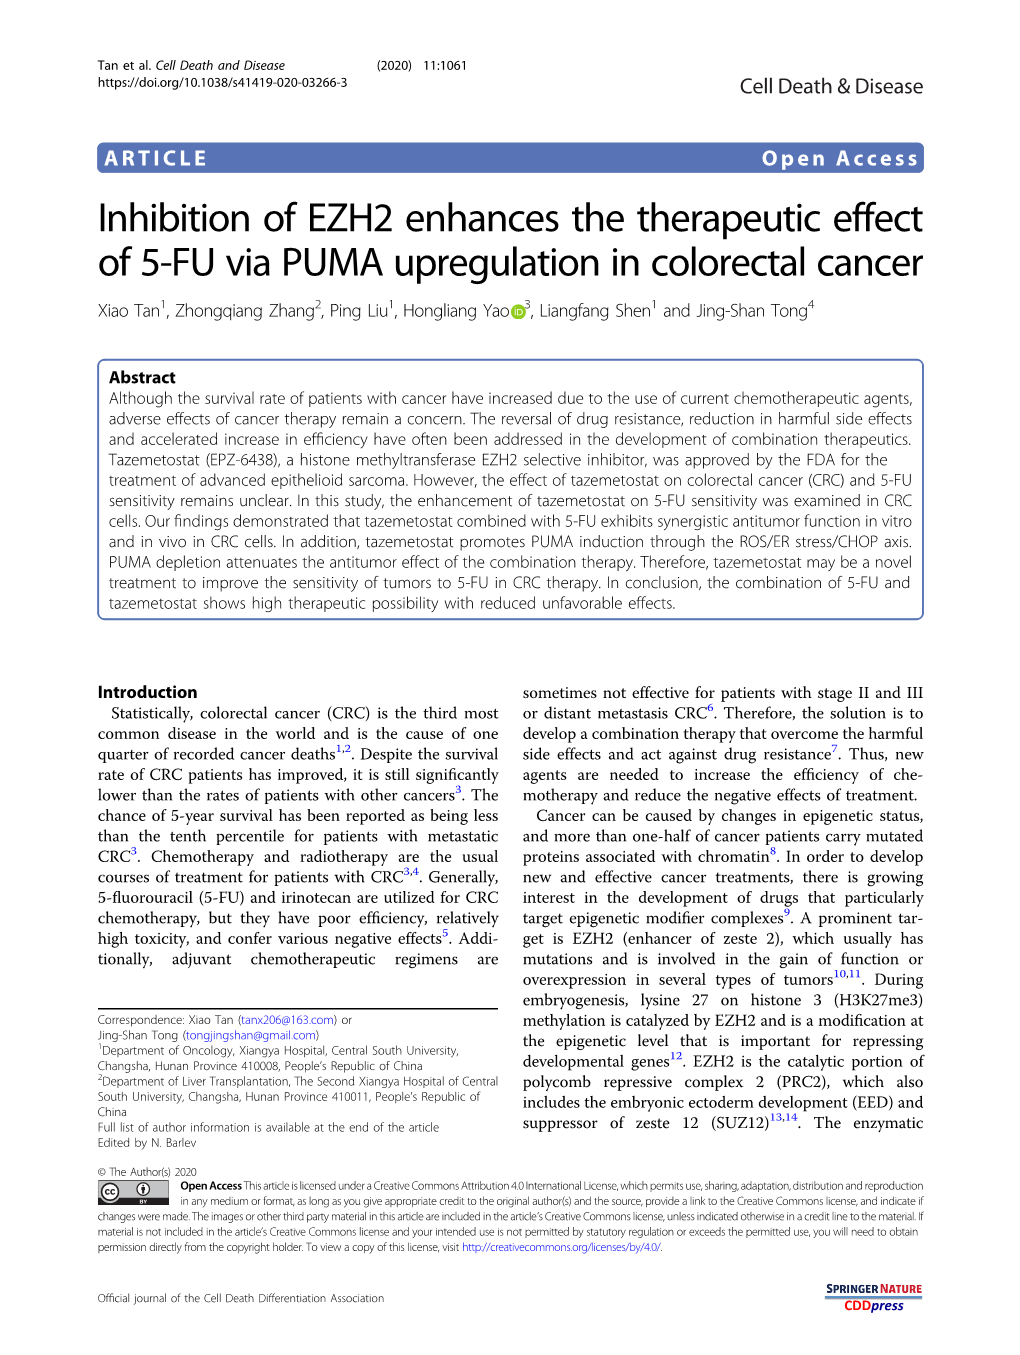 Inhibition of EZH2 Enhances the Therapeutic Effect of 5-FU Via PUMA